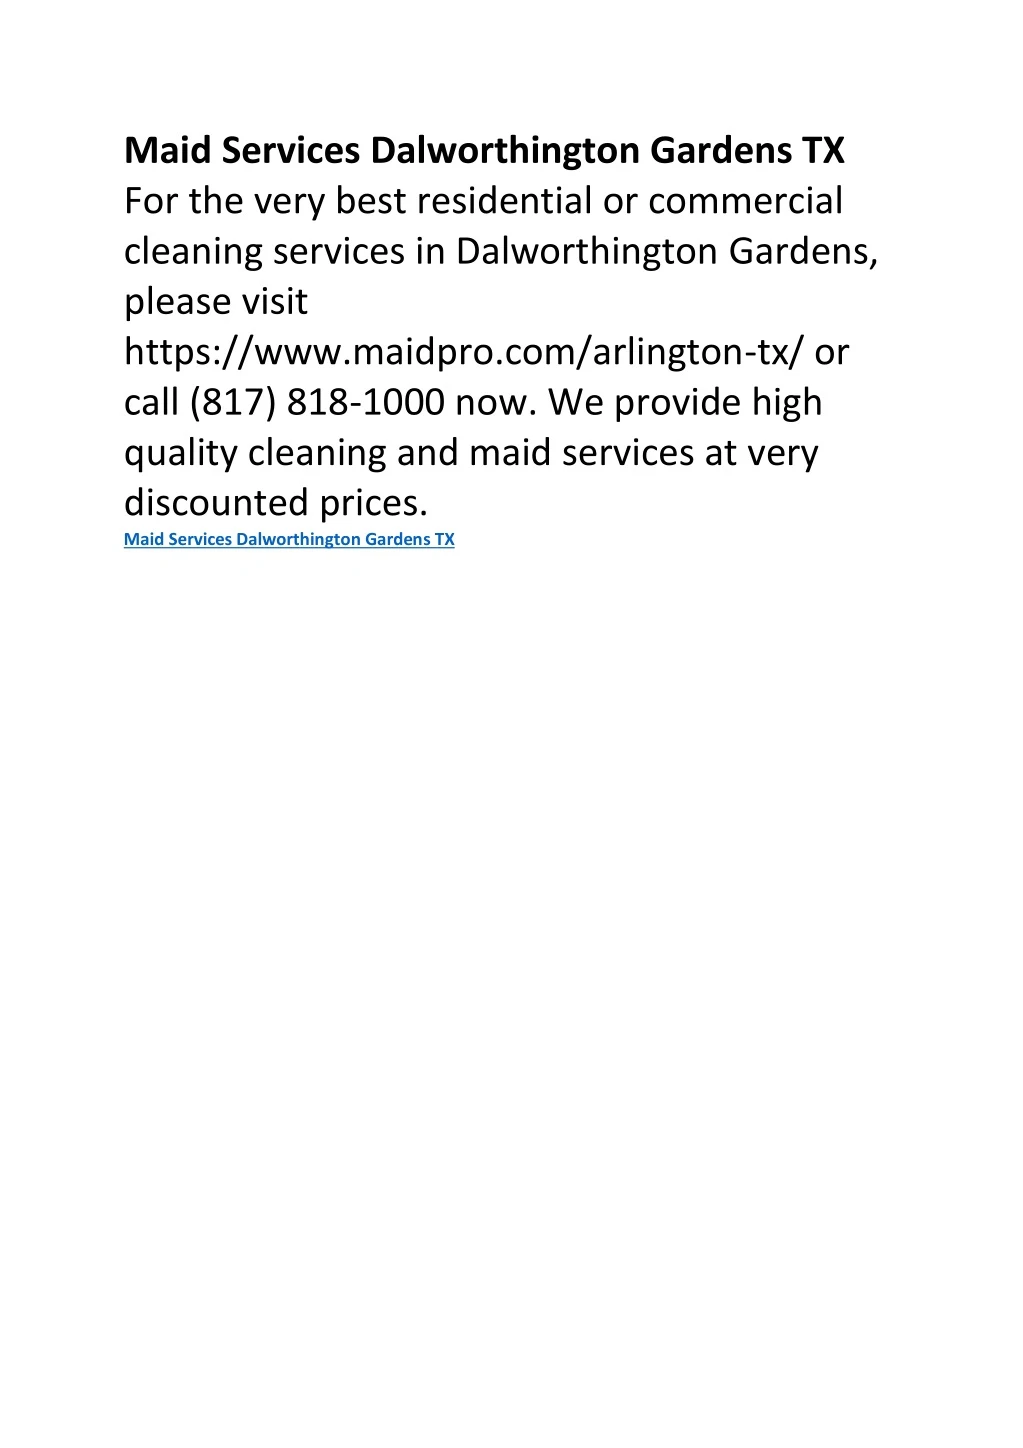 maid services dalworthington gardens